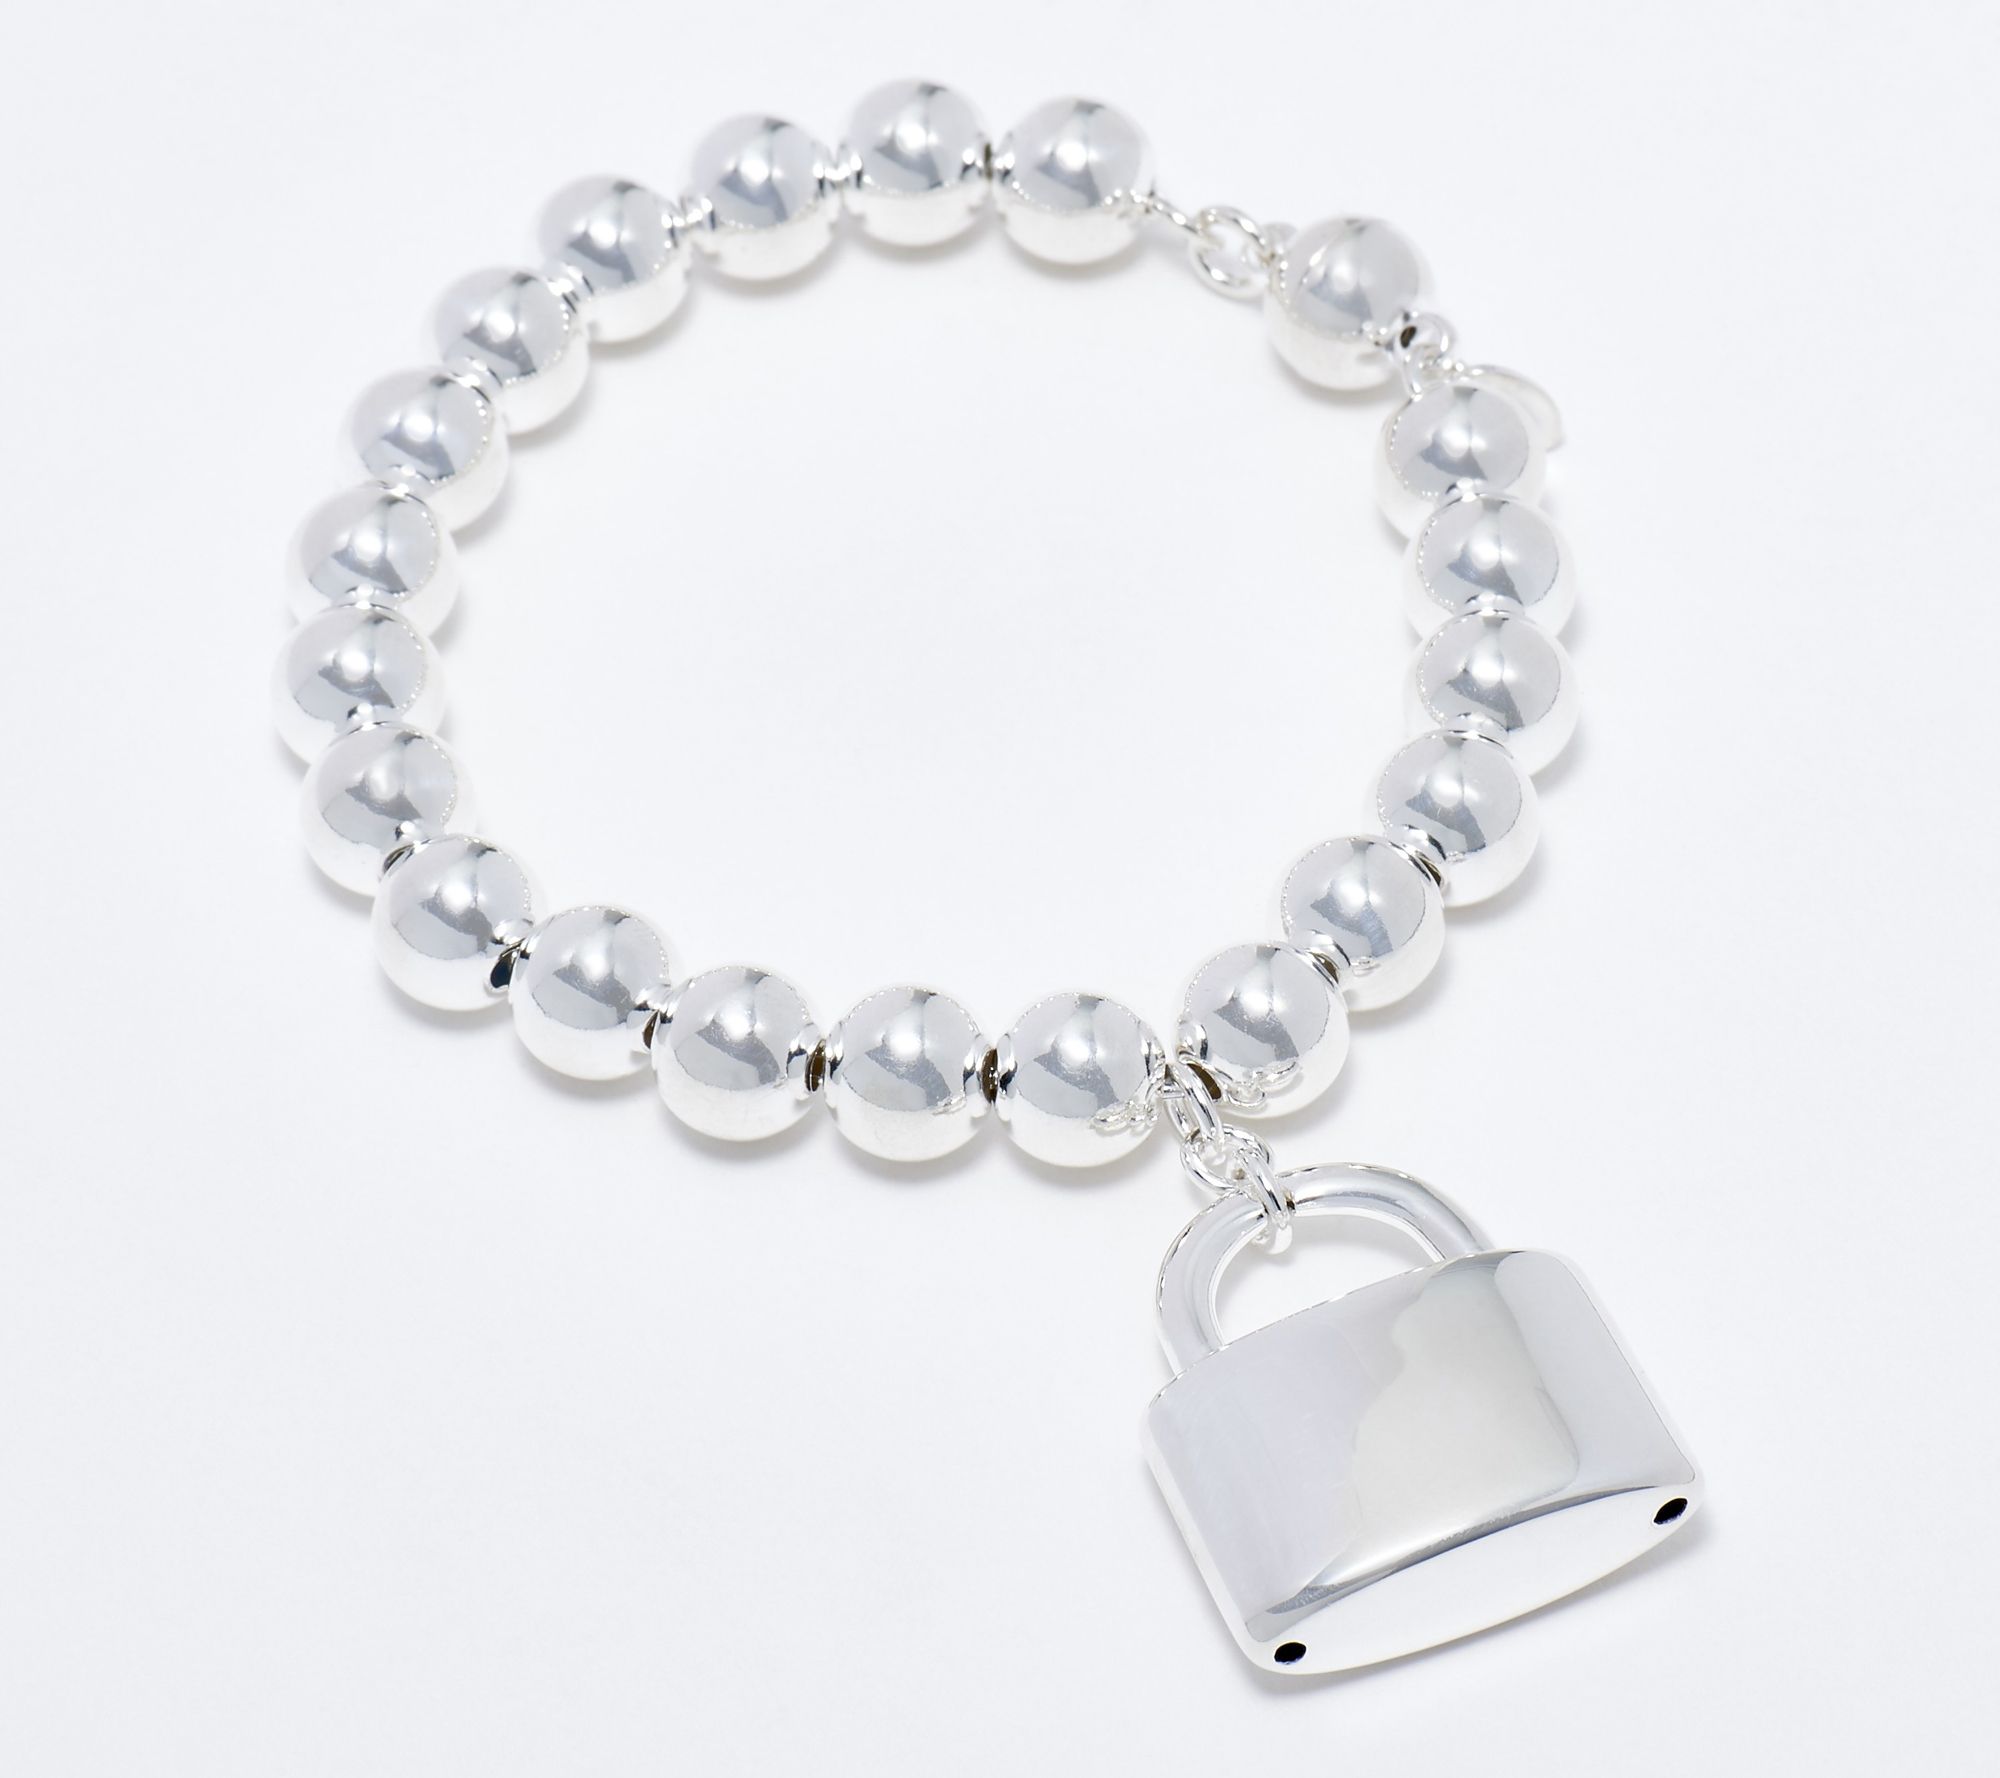 Edge Bracelet - Silver - Q Evon Fine Jewelry Collections Small